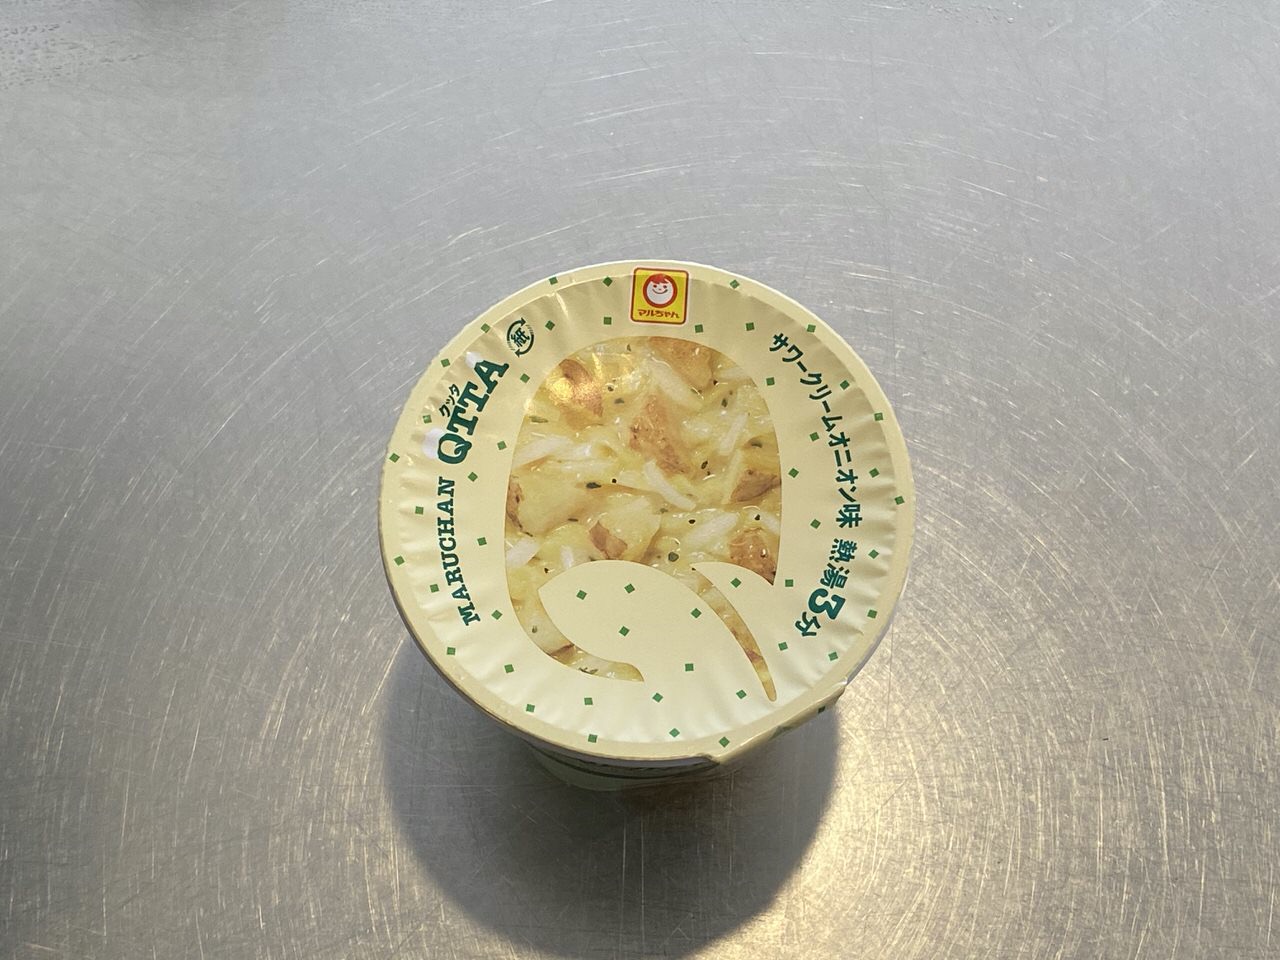 B級フード研究家ノジマ氏がカップ麺オブ・ザ・イヤー2019に選んだ「QTTA サワークリームオニオン味」食べてみた！